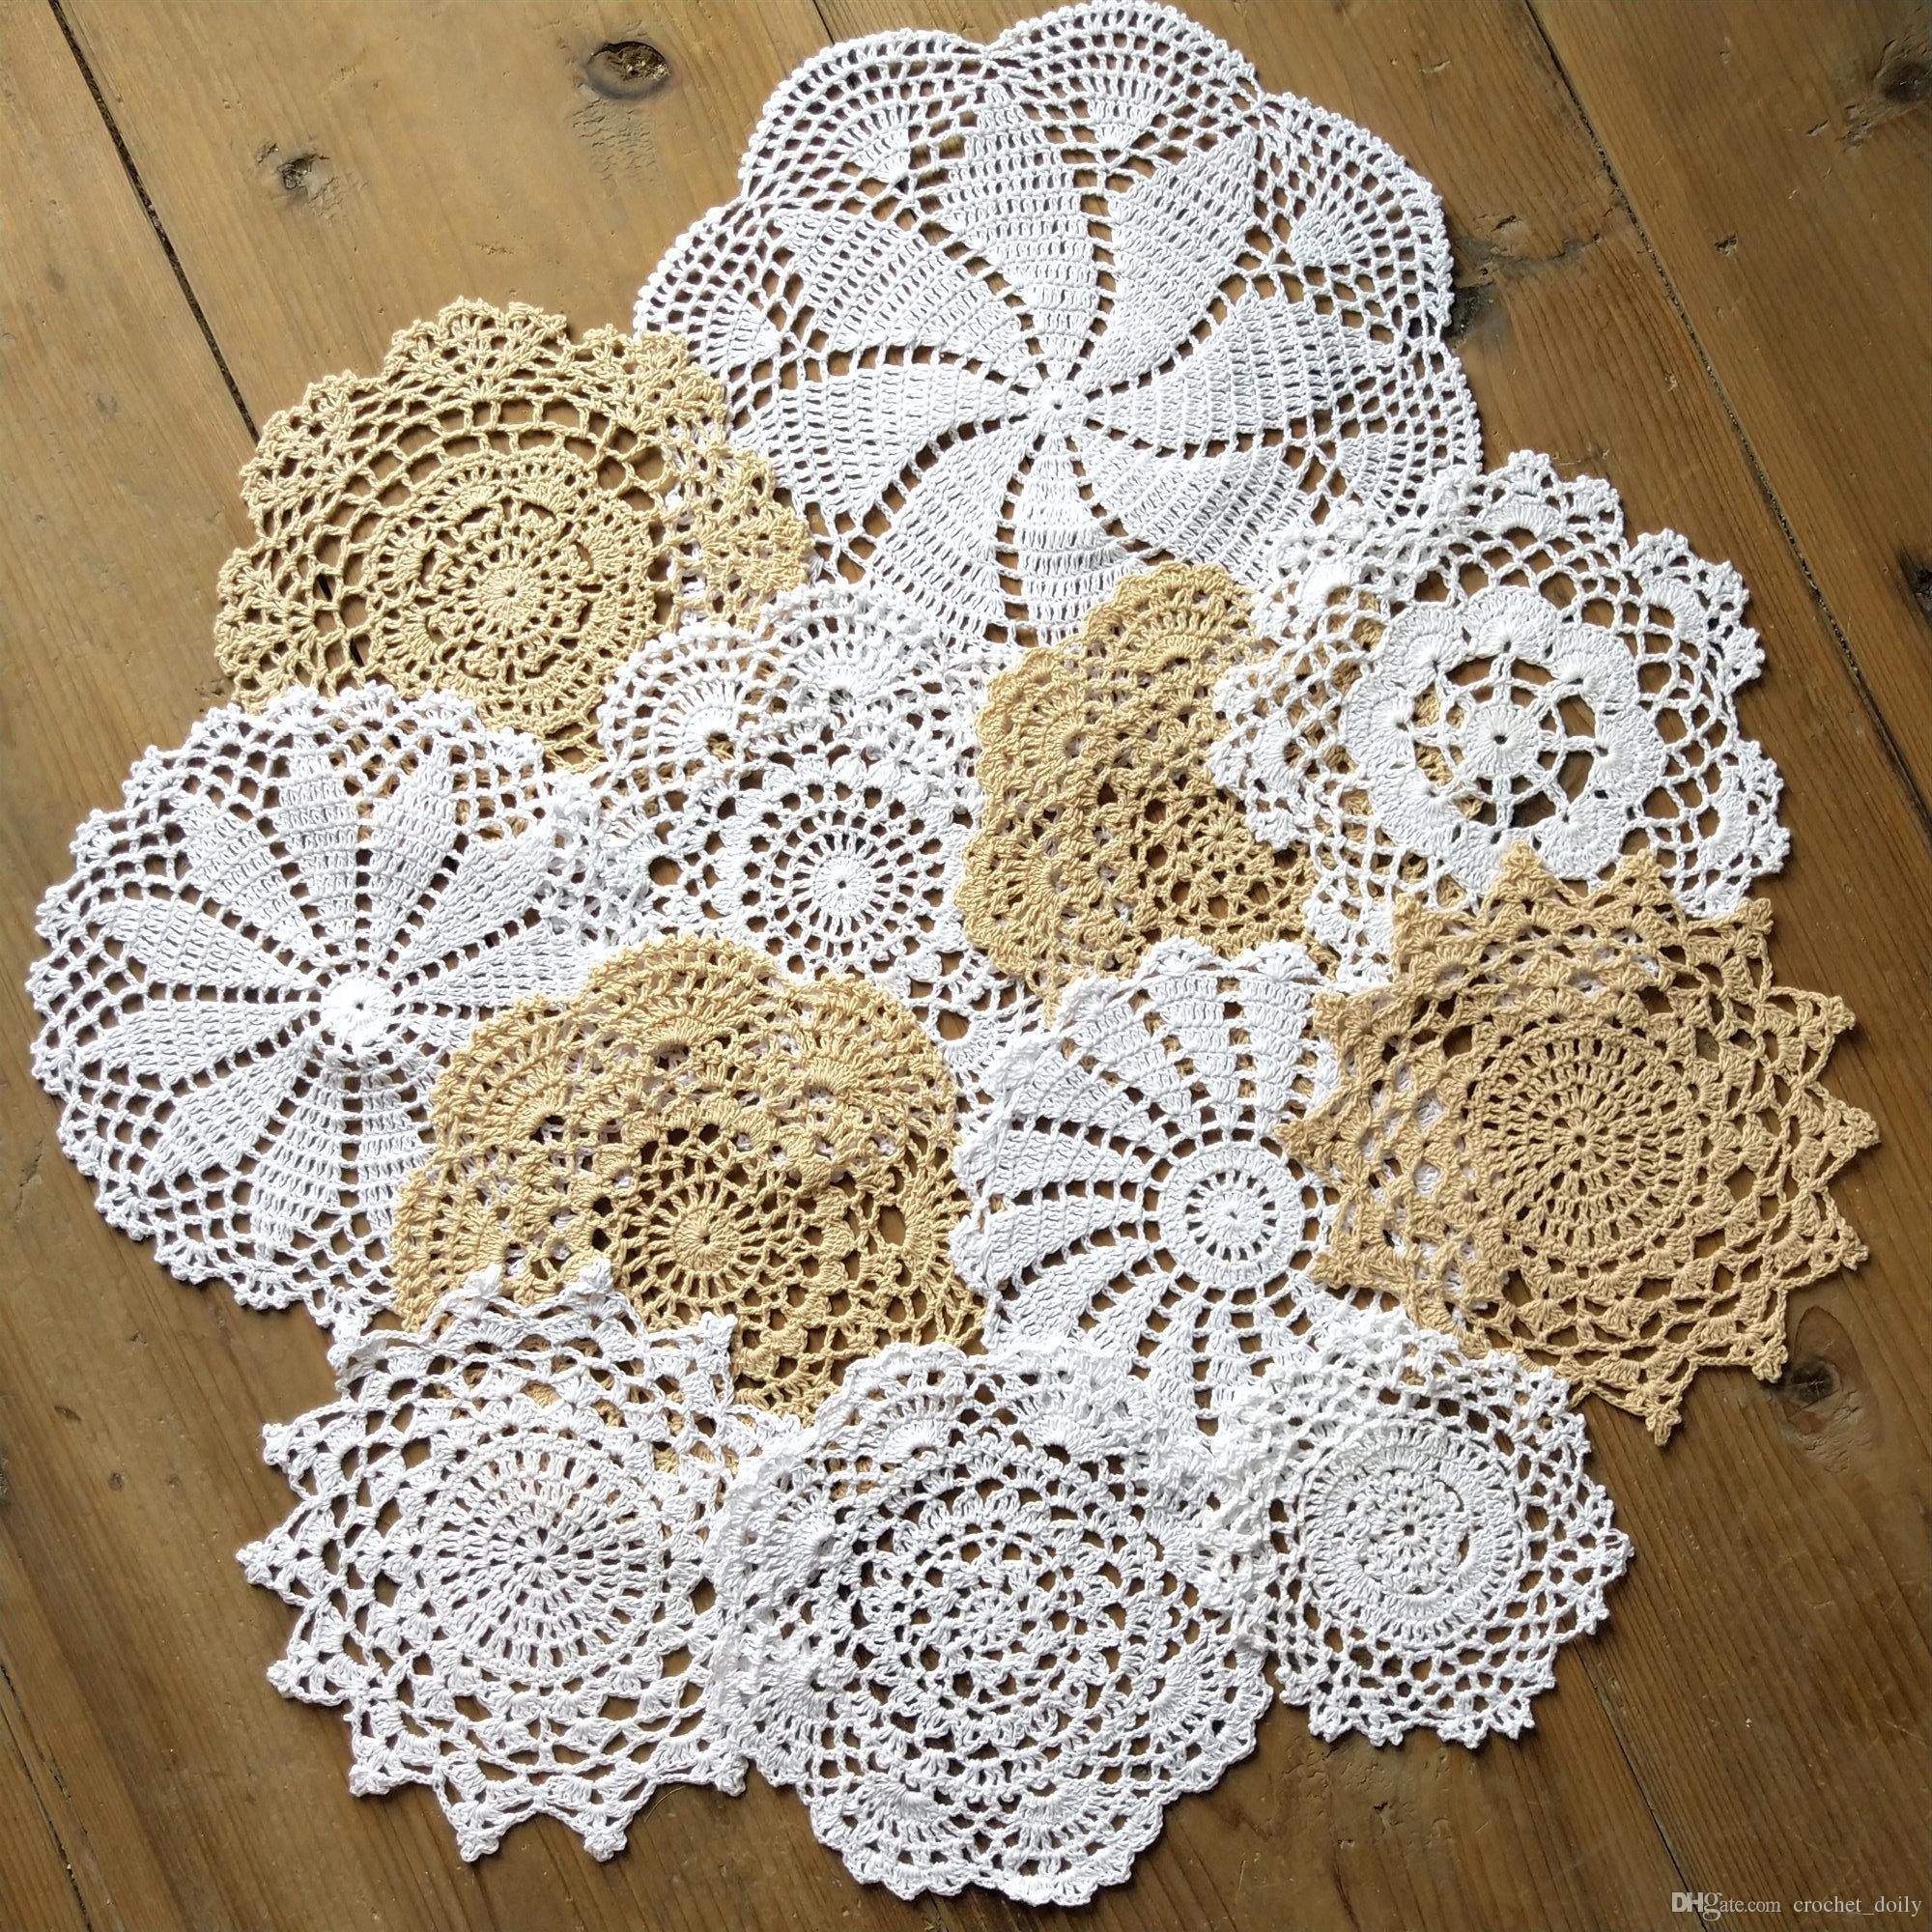 Crochet Centerpiece Pattern 2019 Of Round Doily For Deamcatcher Home Dimeter 5 7 8 9 10